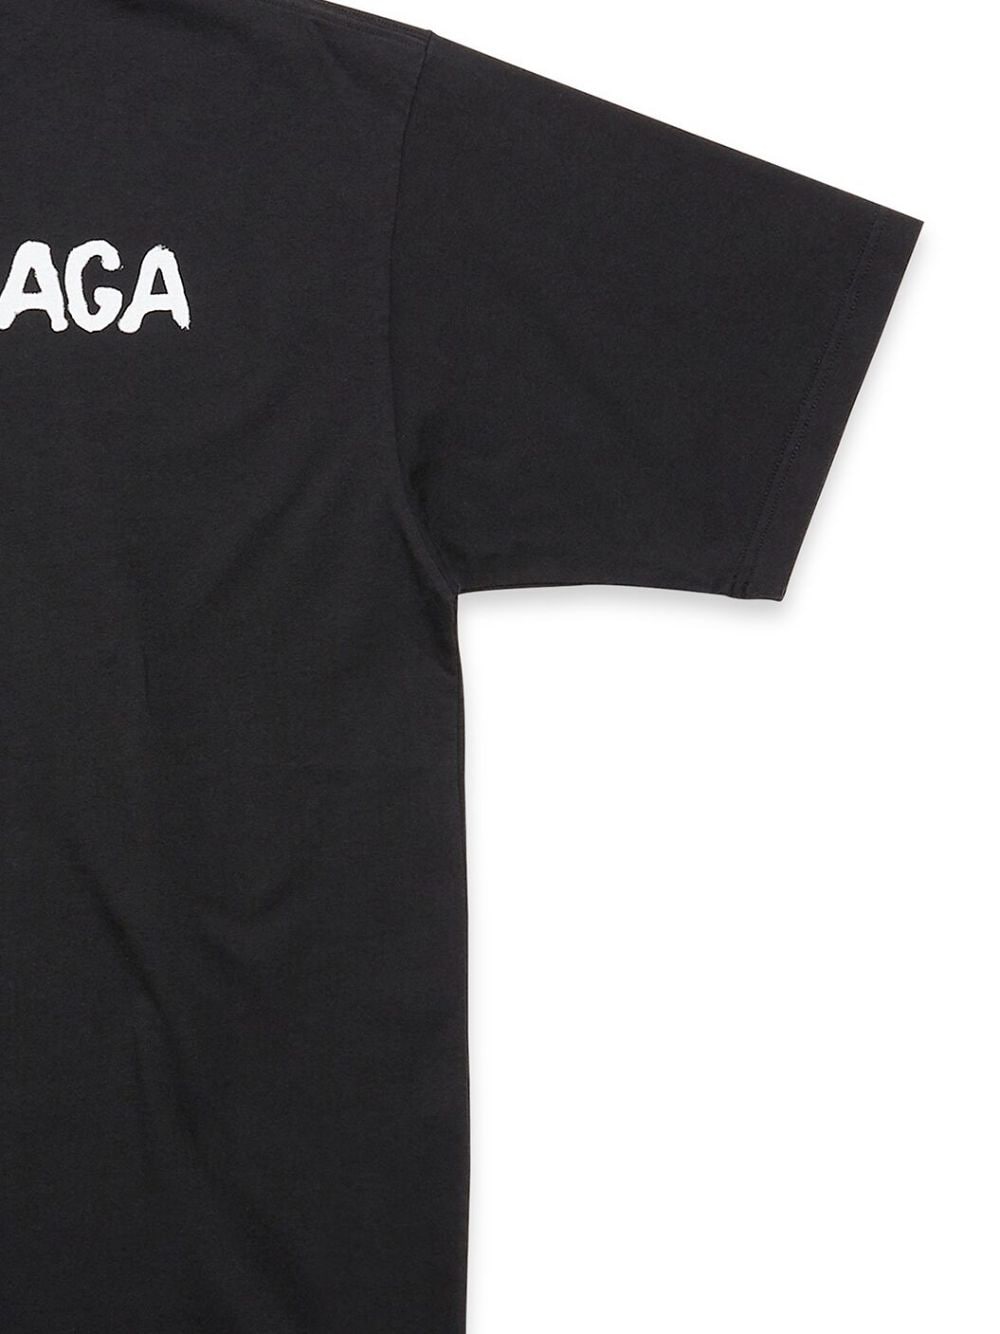 Balenciaga Logo-Print Distressed T-Shirt - Black for Women